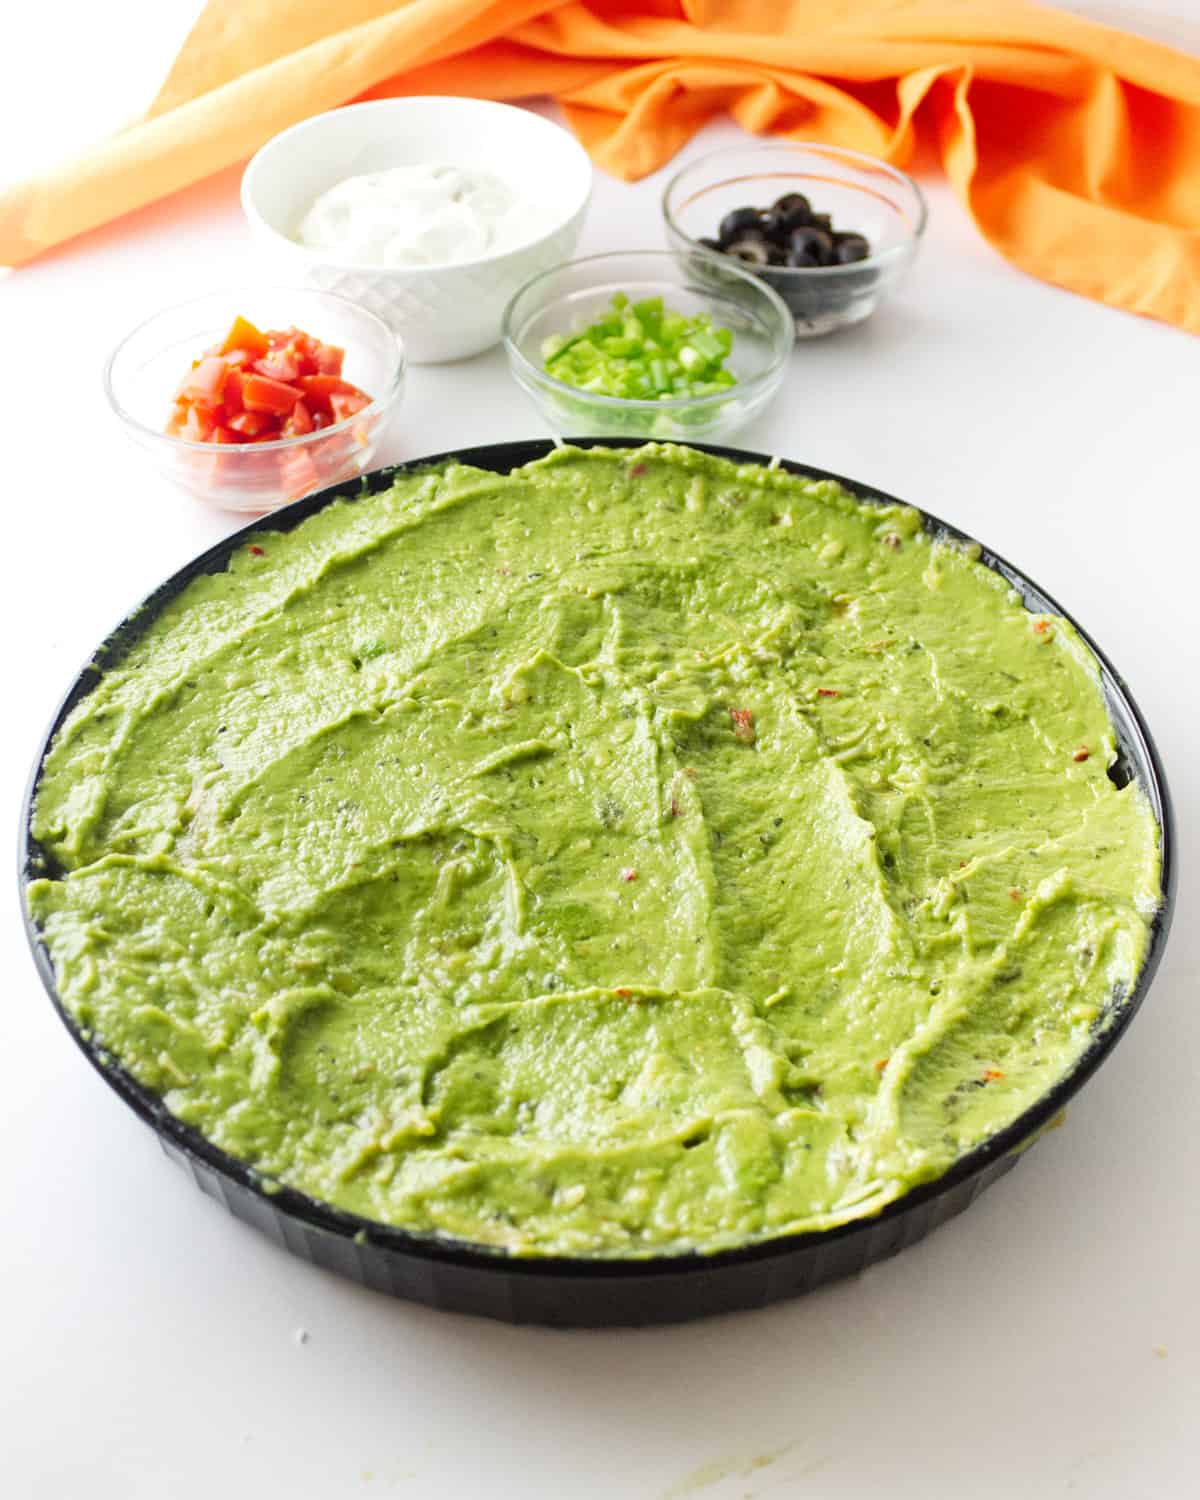 avocado mash, spread out in a dish.